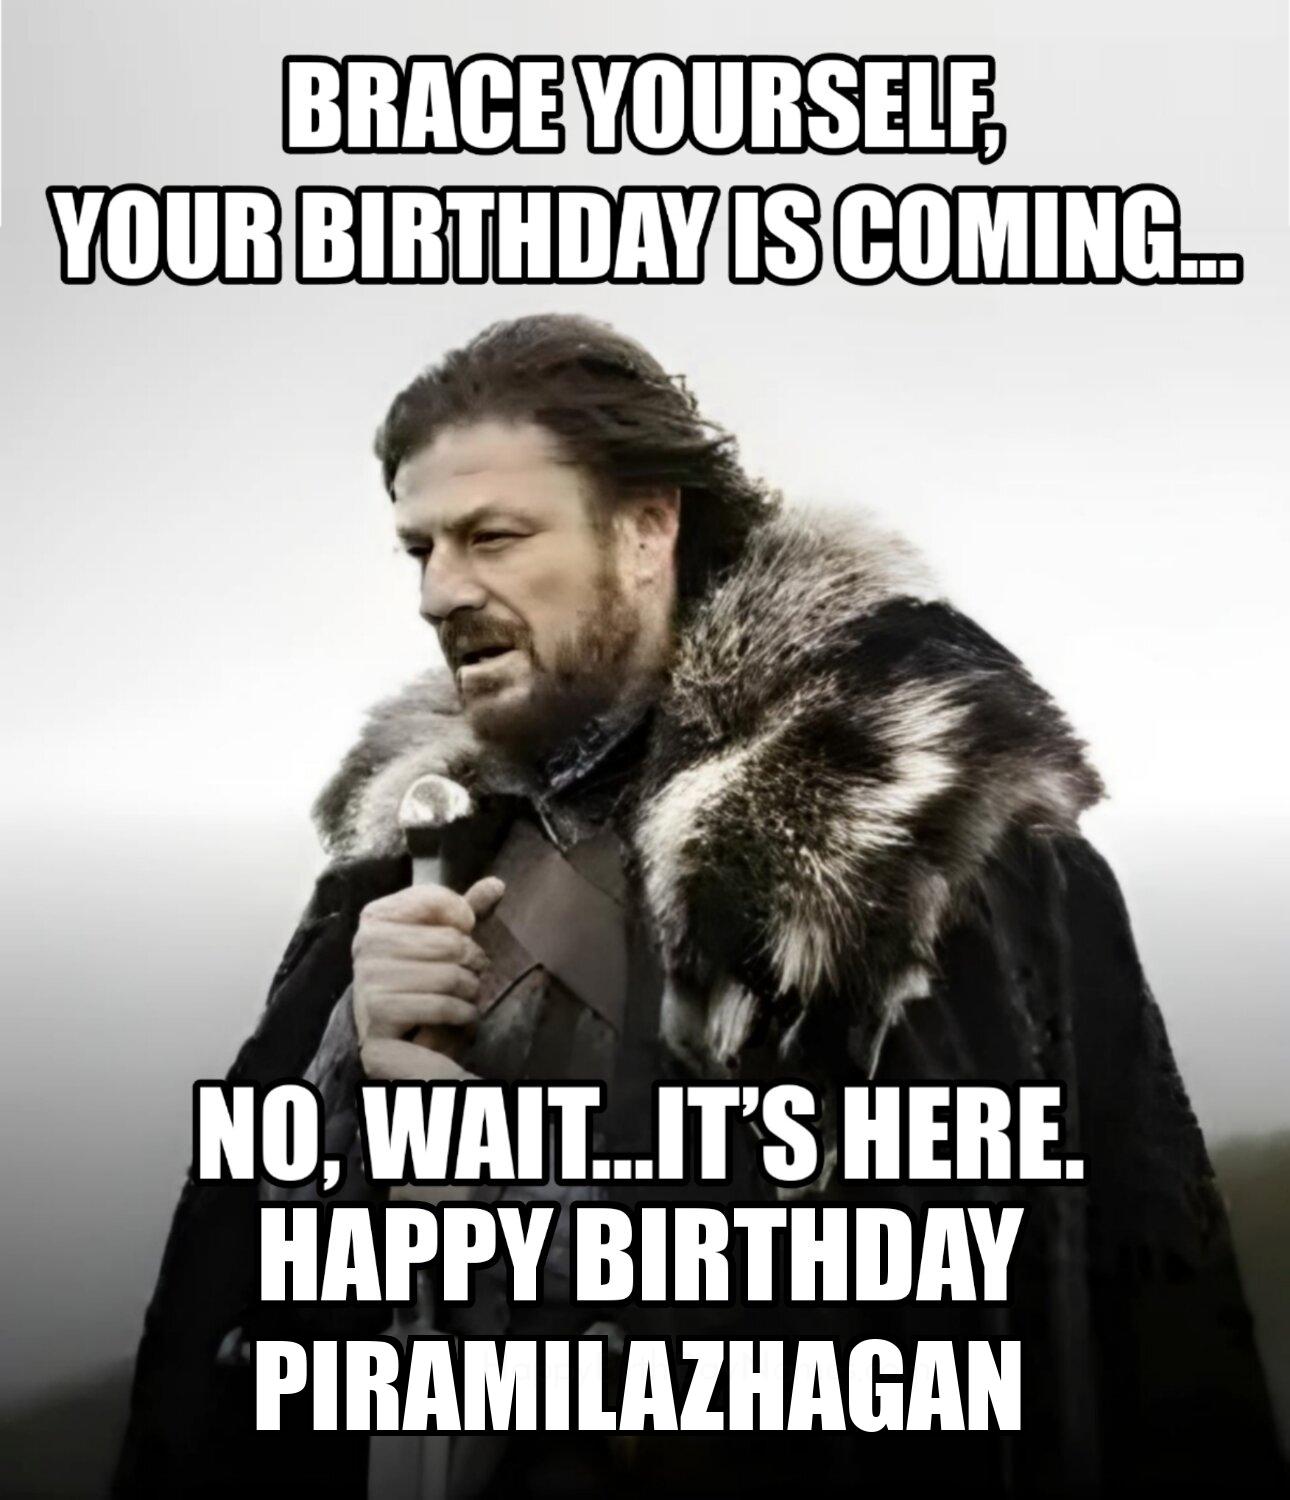 Happy Birthday Piramilazhagan Brace Yourself Your Birthday Is Coming Meme